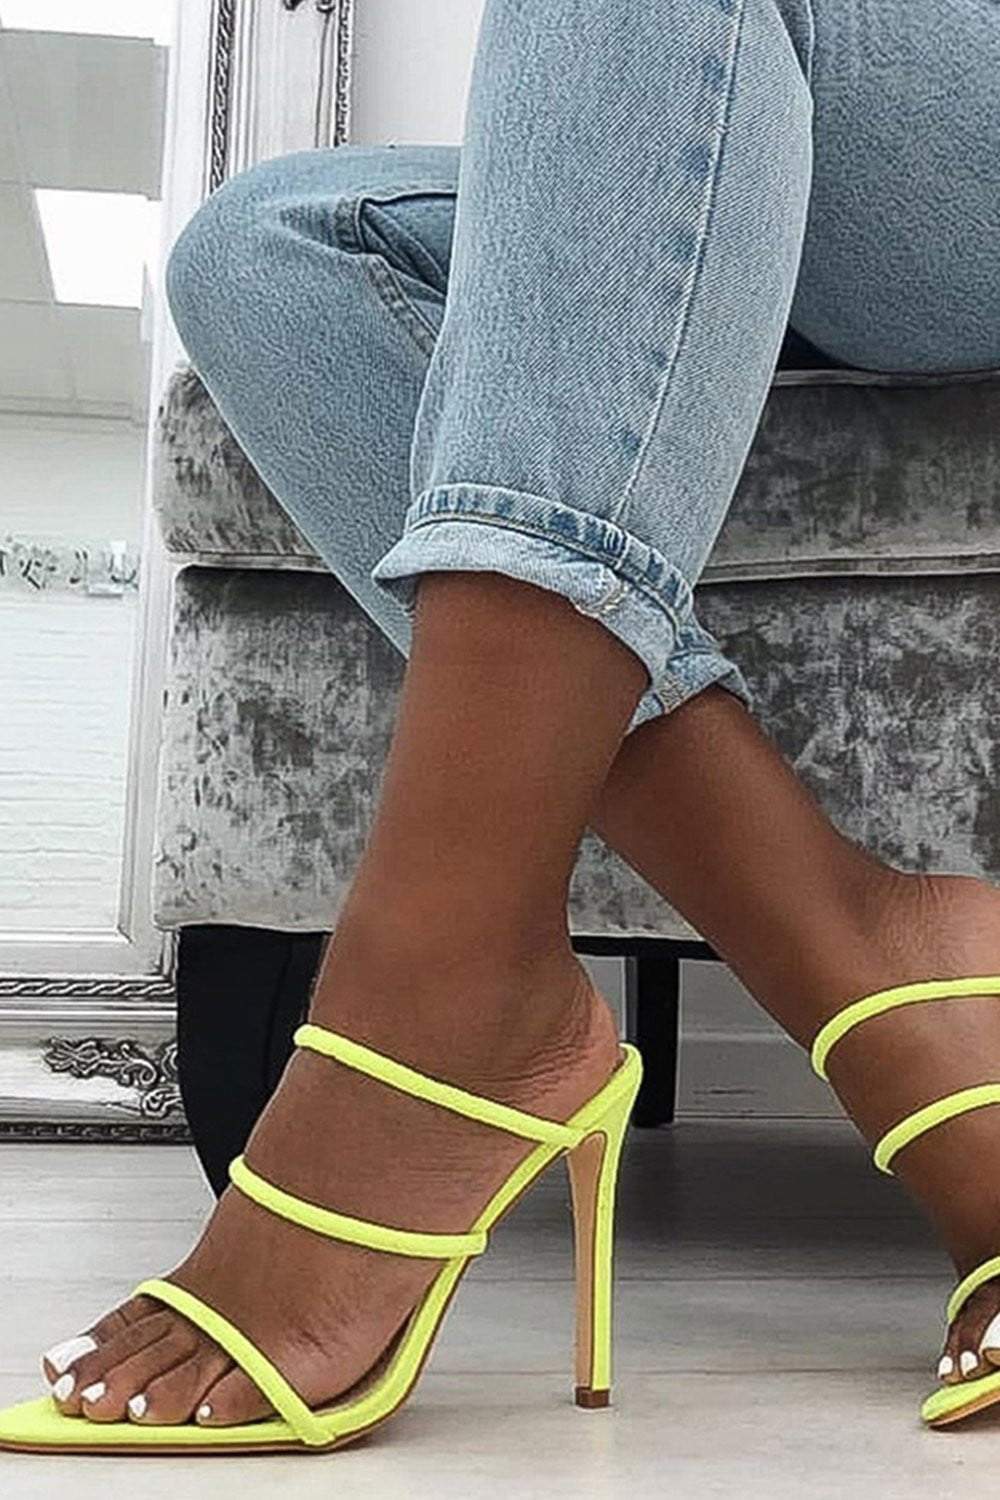 yellow mules heels